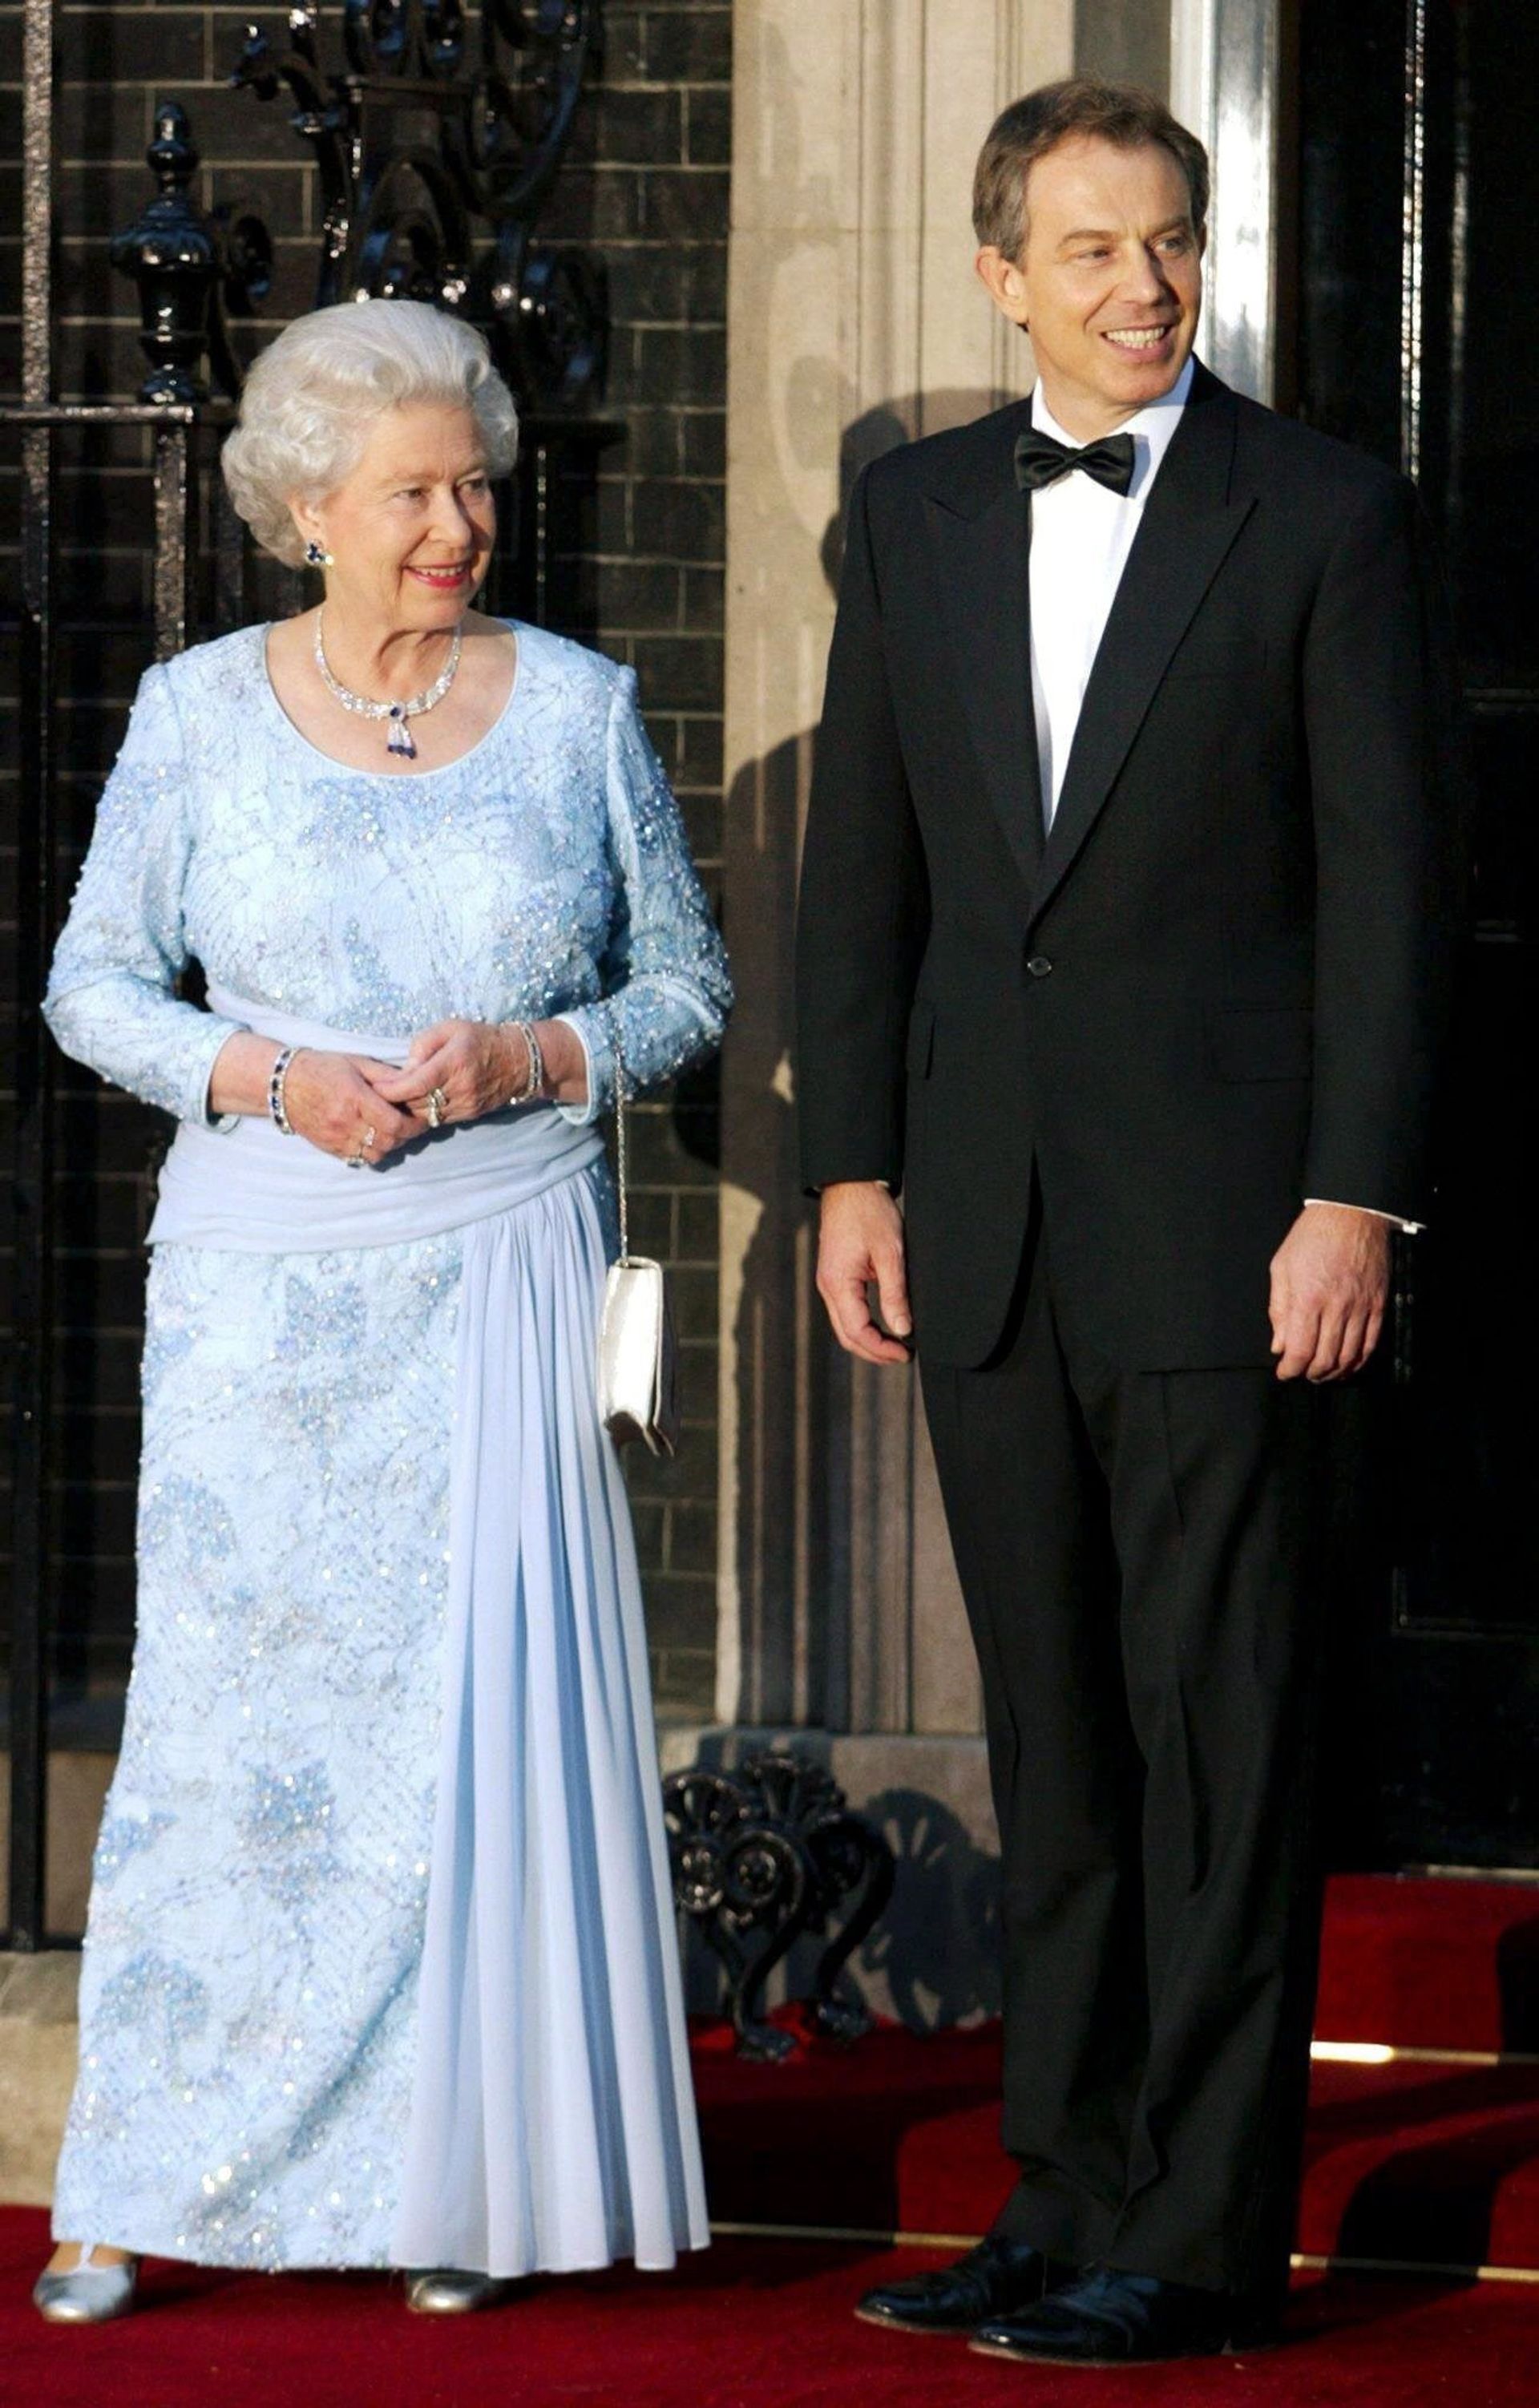 Tony Blair en koningin Elizabeth in 2002.